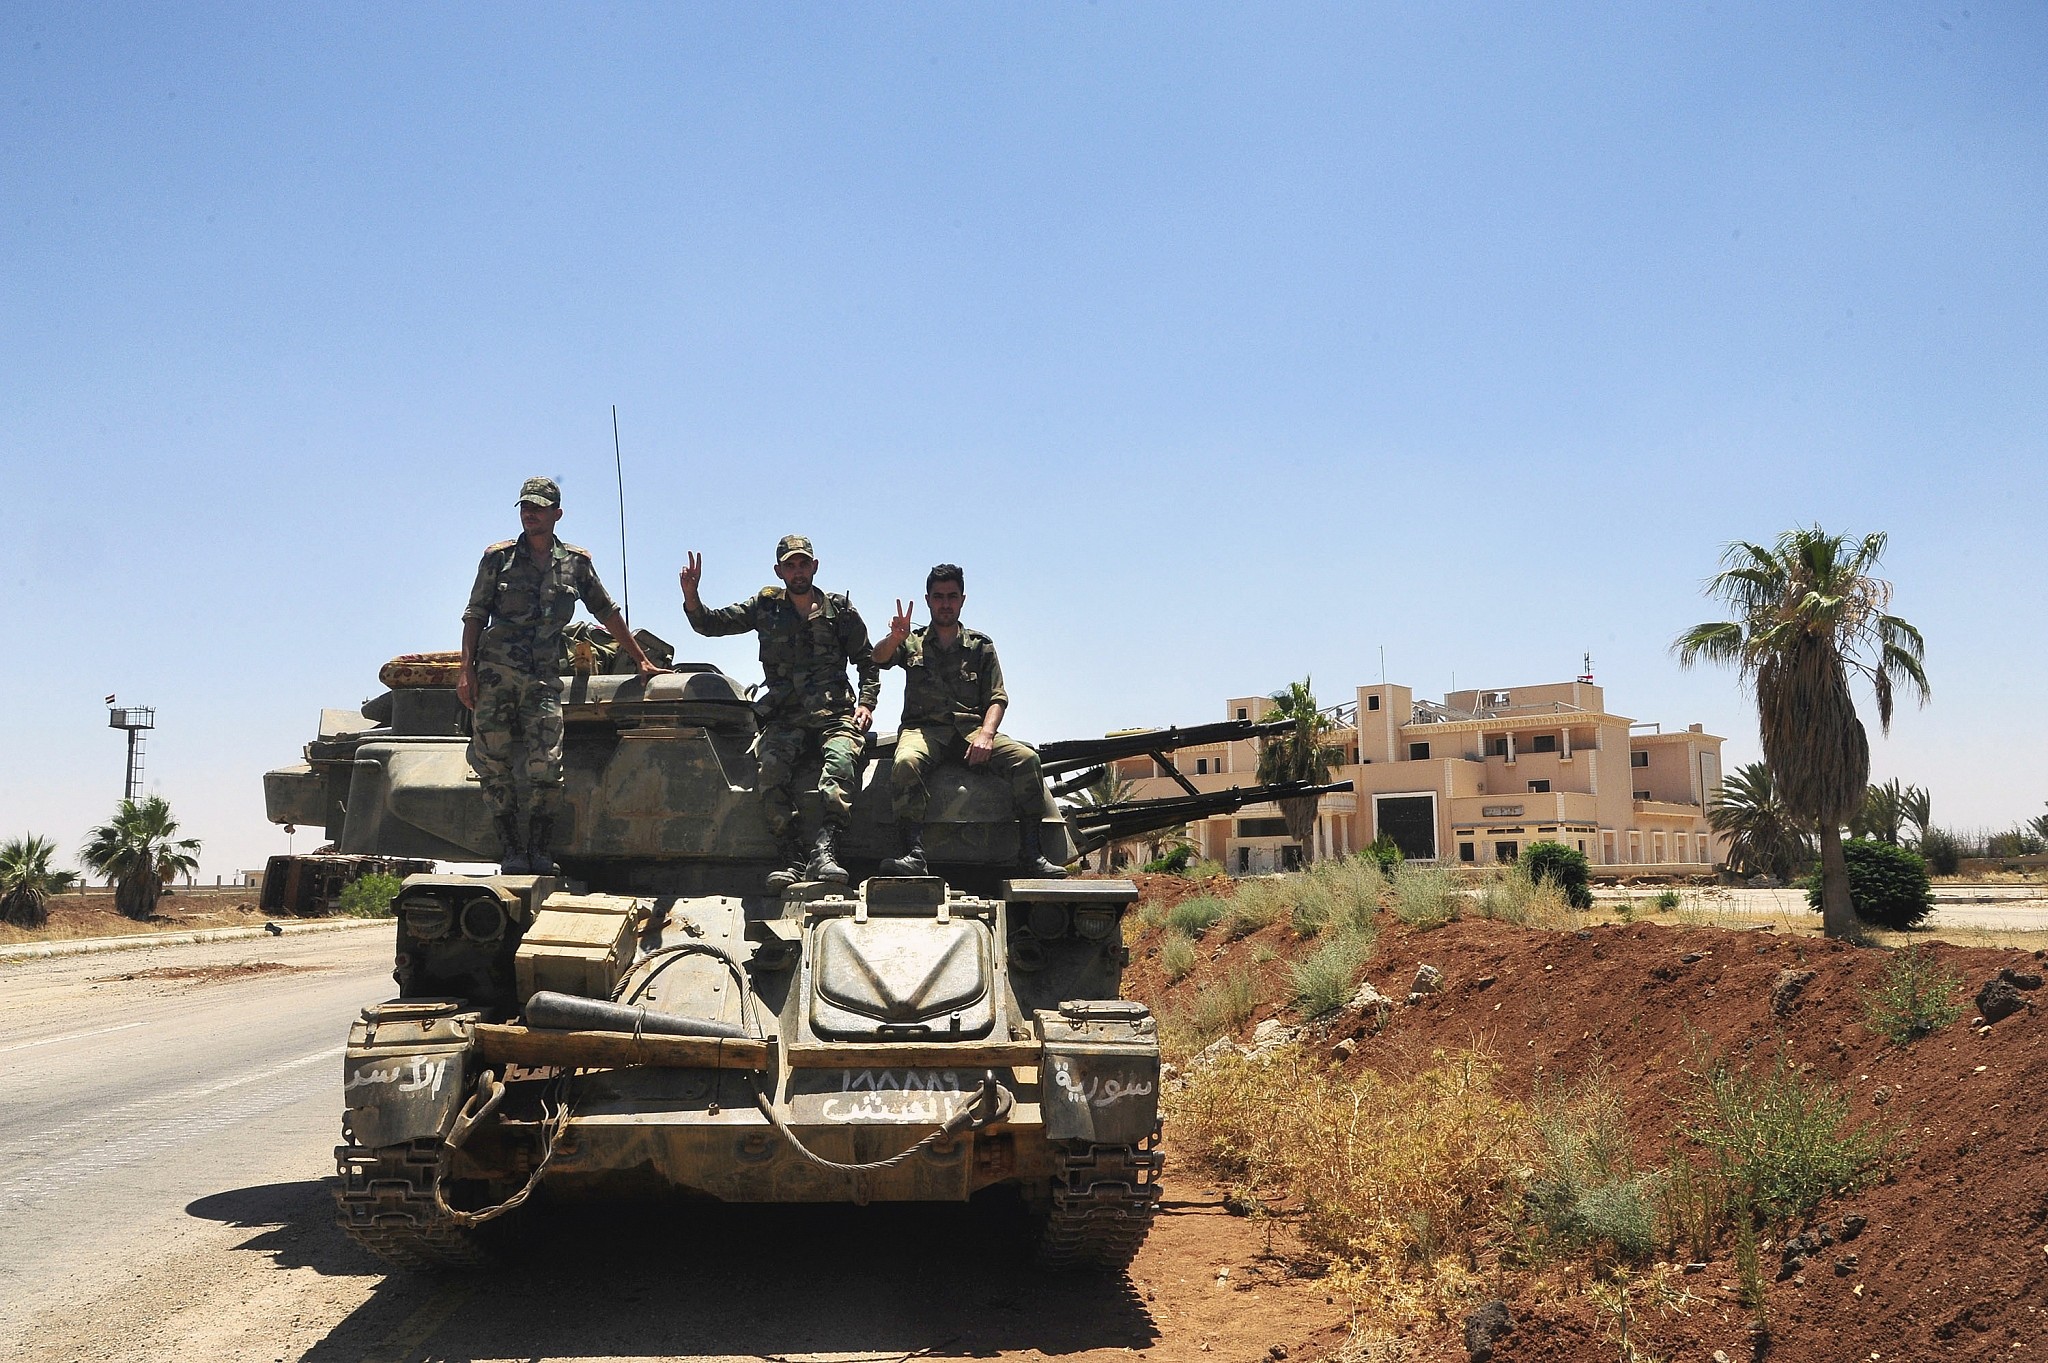 Assad forces retake Syrian rebel stronghold of Deraa